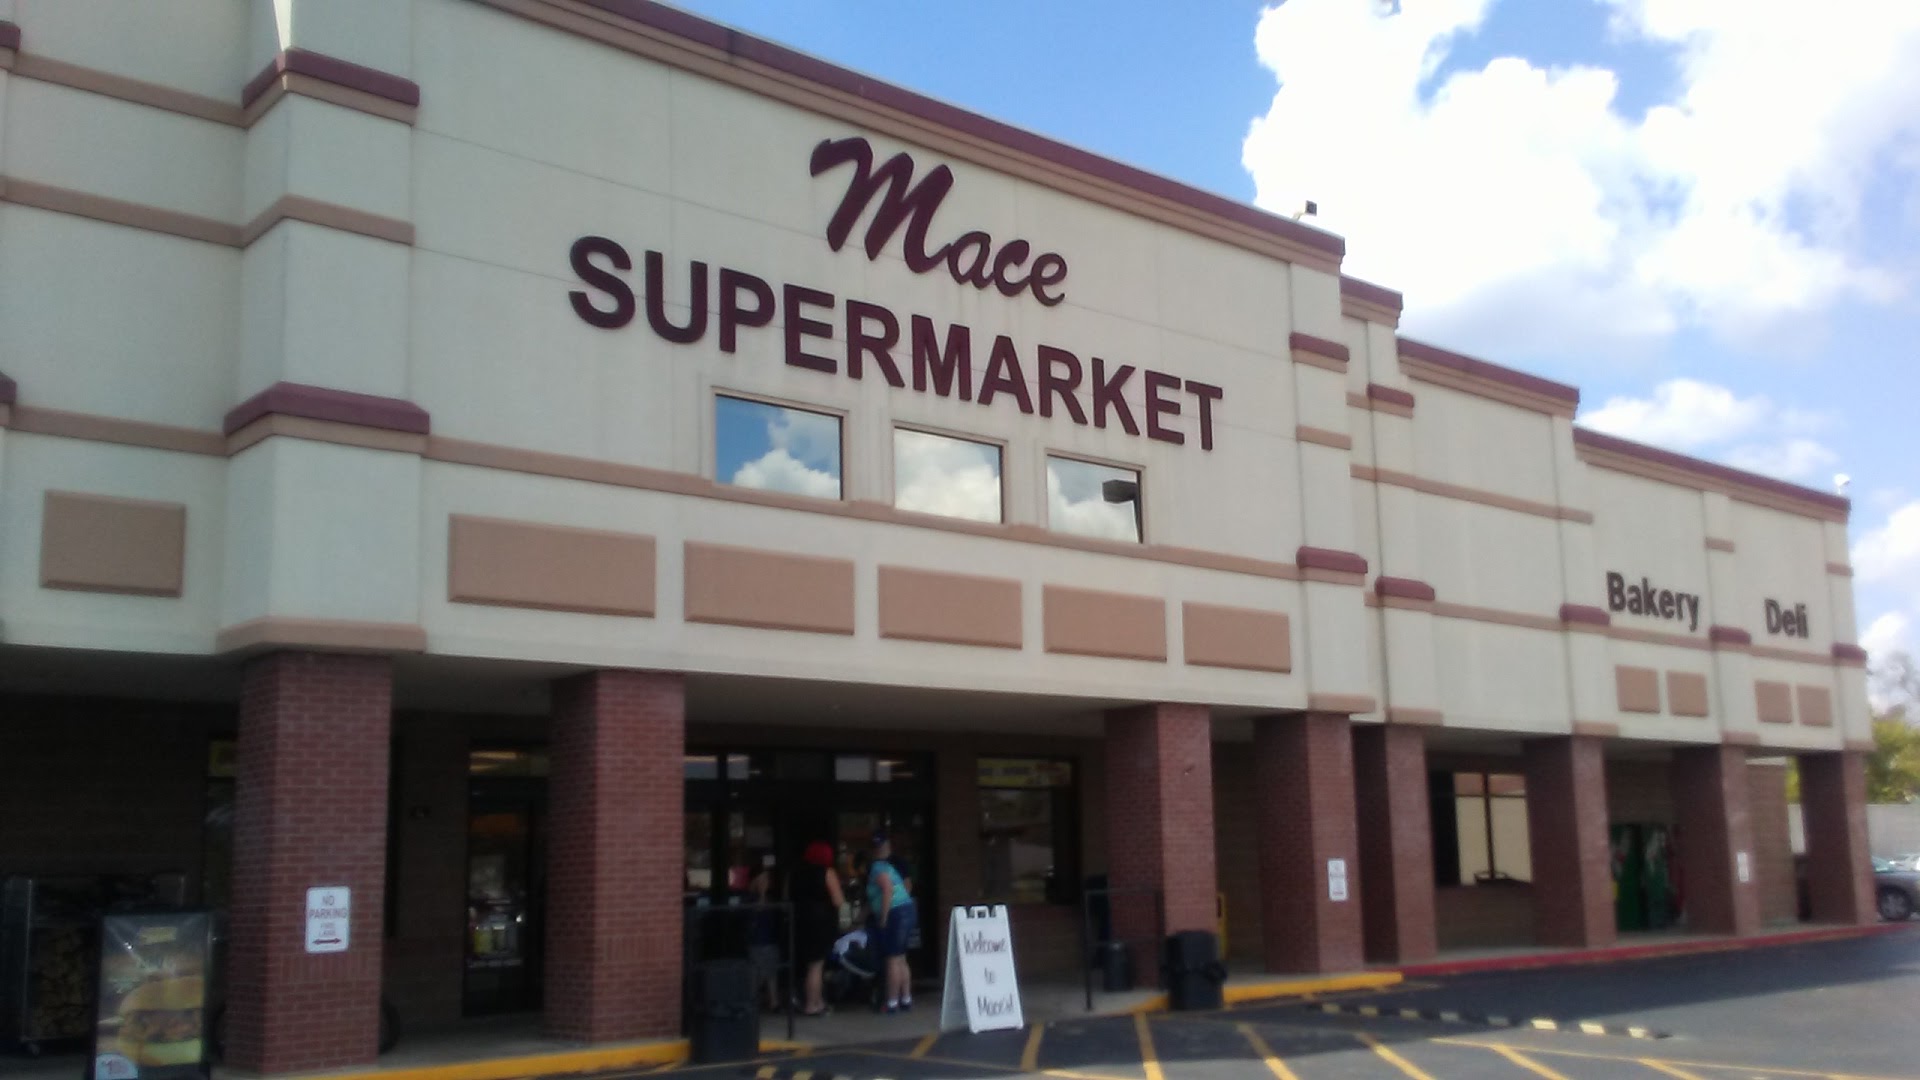 Mace Supermarket